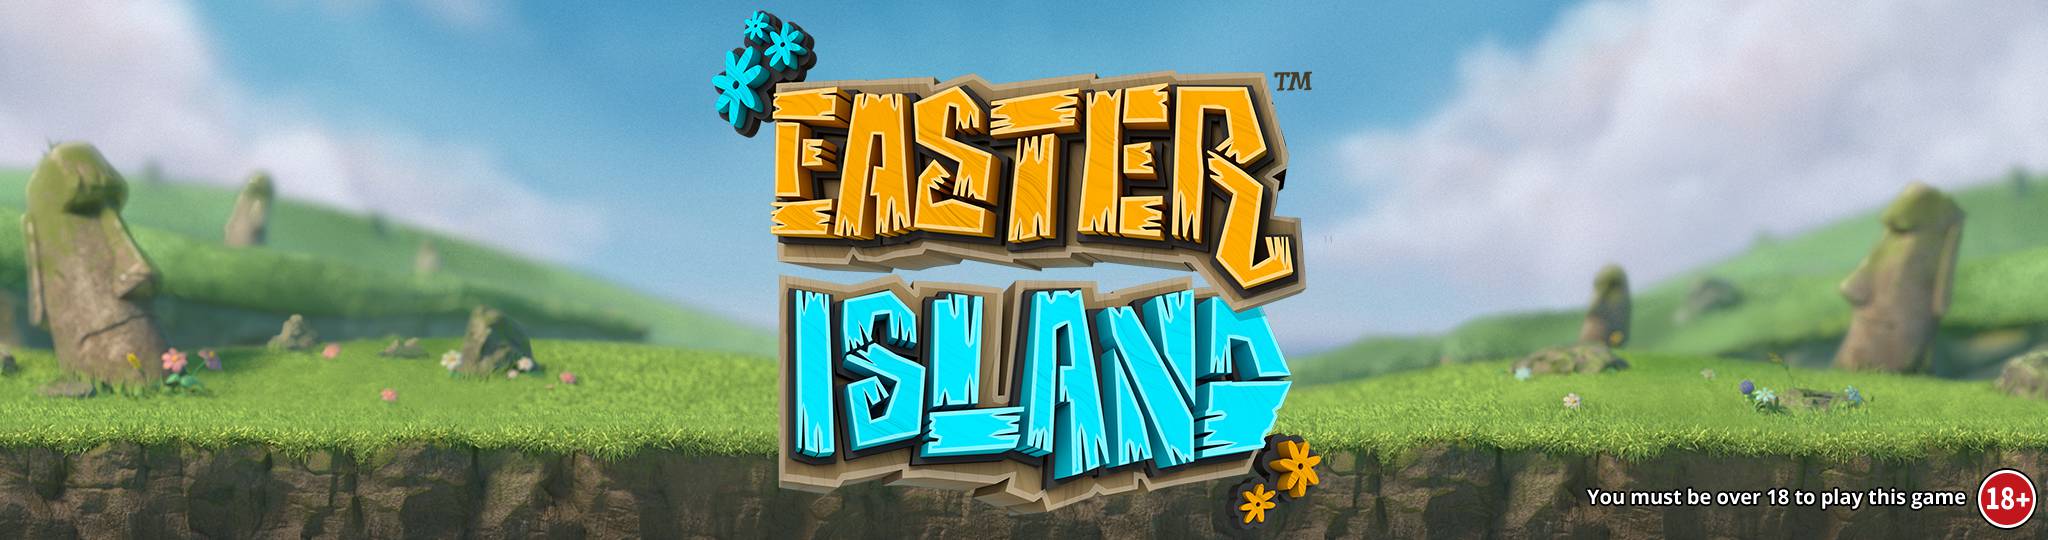 easter island slots game logo